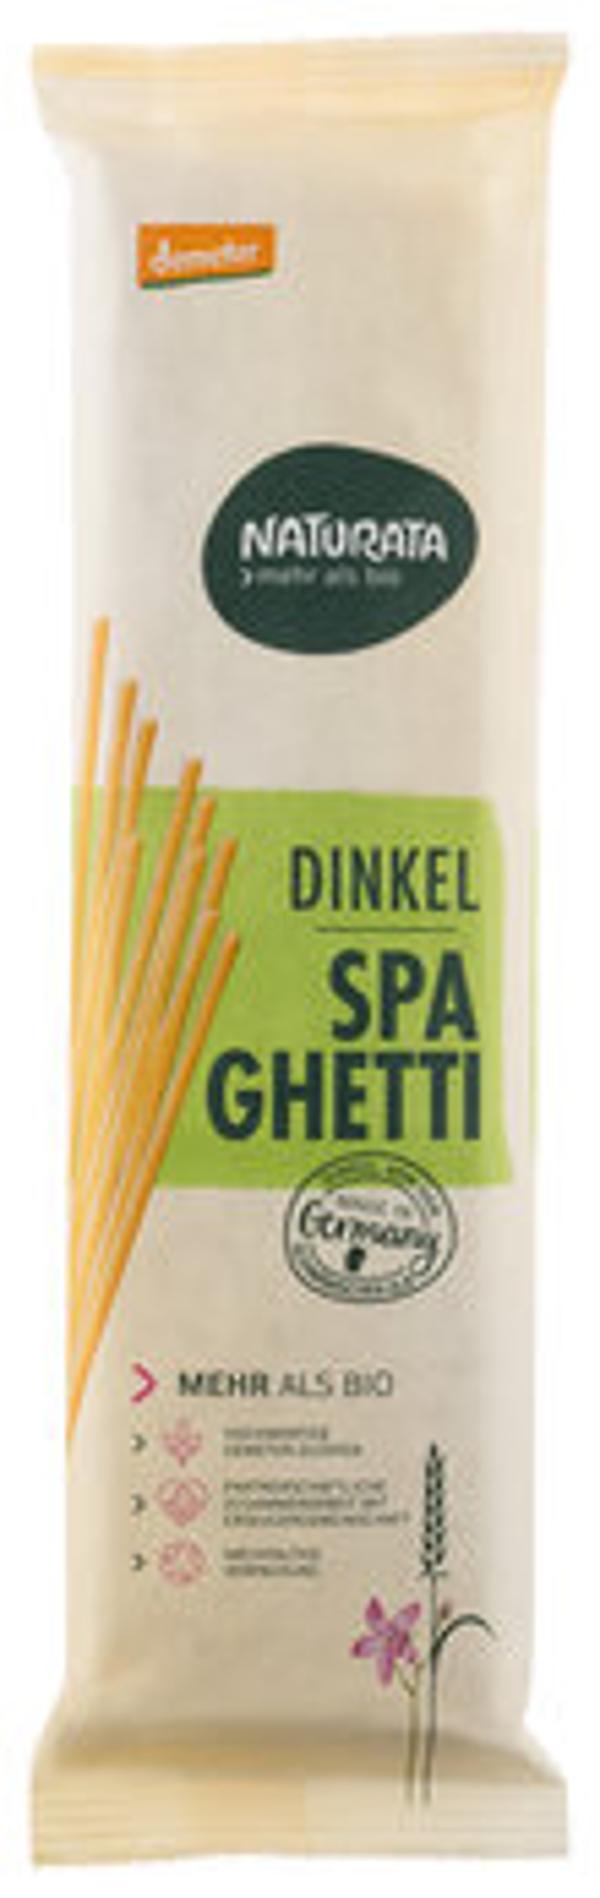 Produktfoto zu Dinkel Spaghetti hell 500g